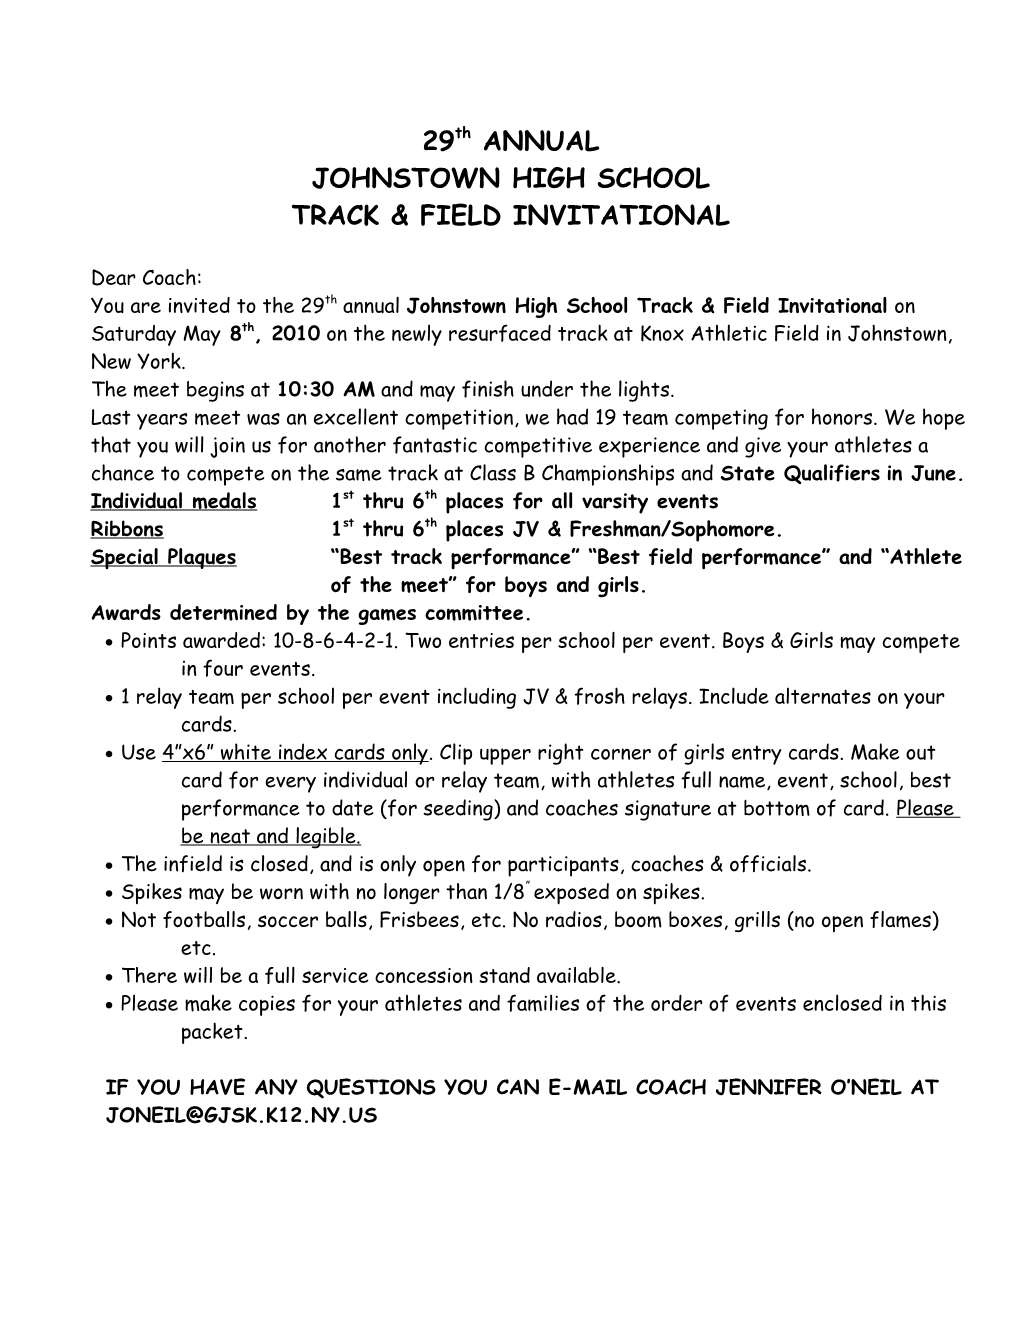 Johnstown High School